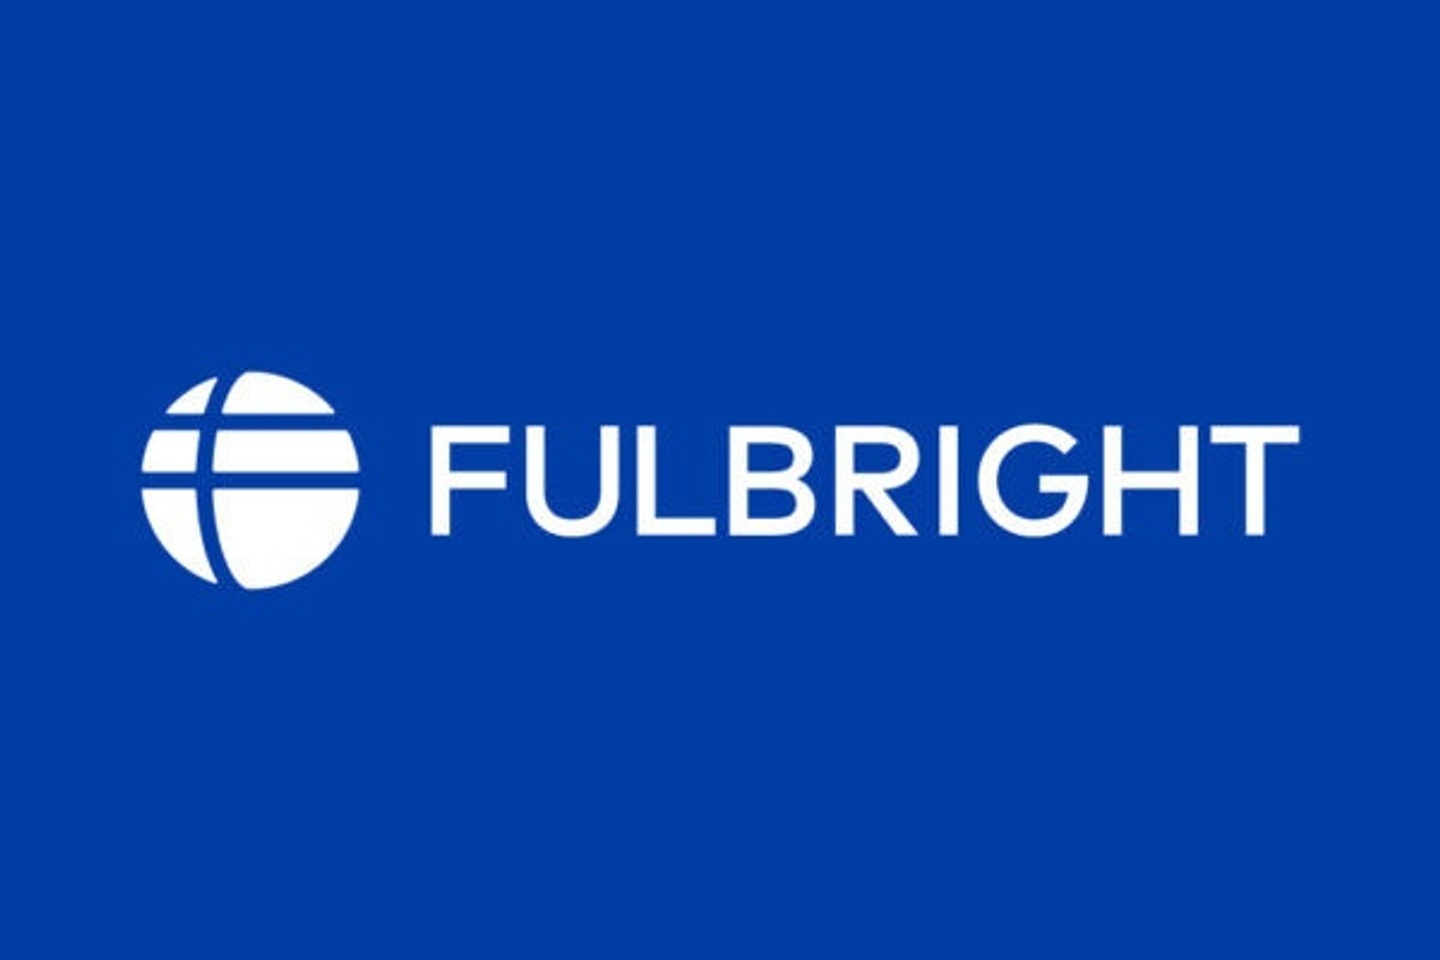 White Fulbright logo on a royal blue background.